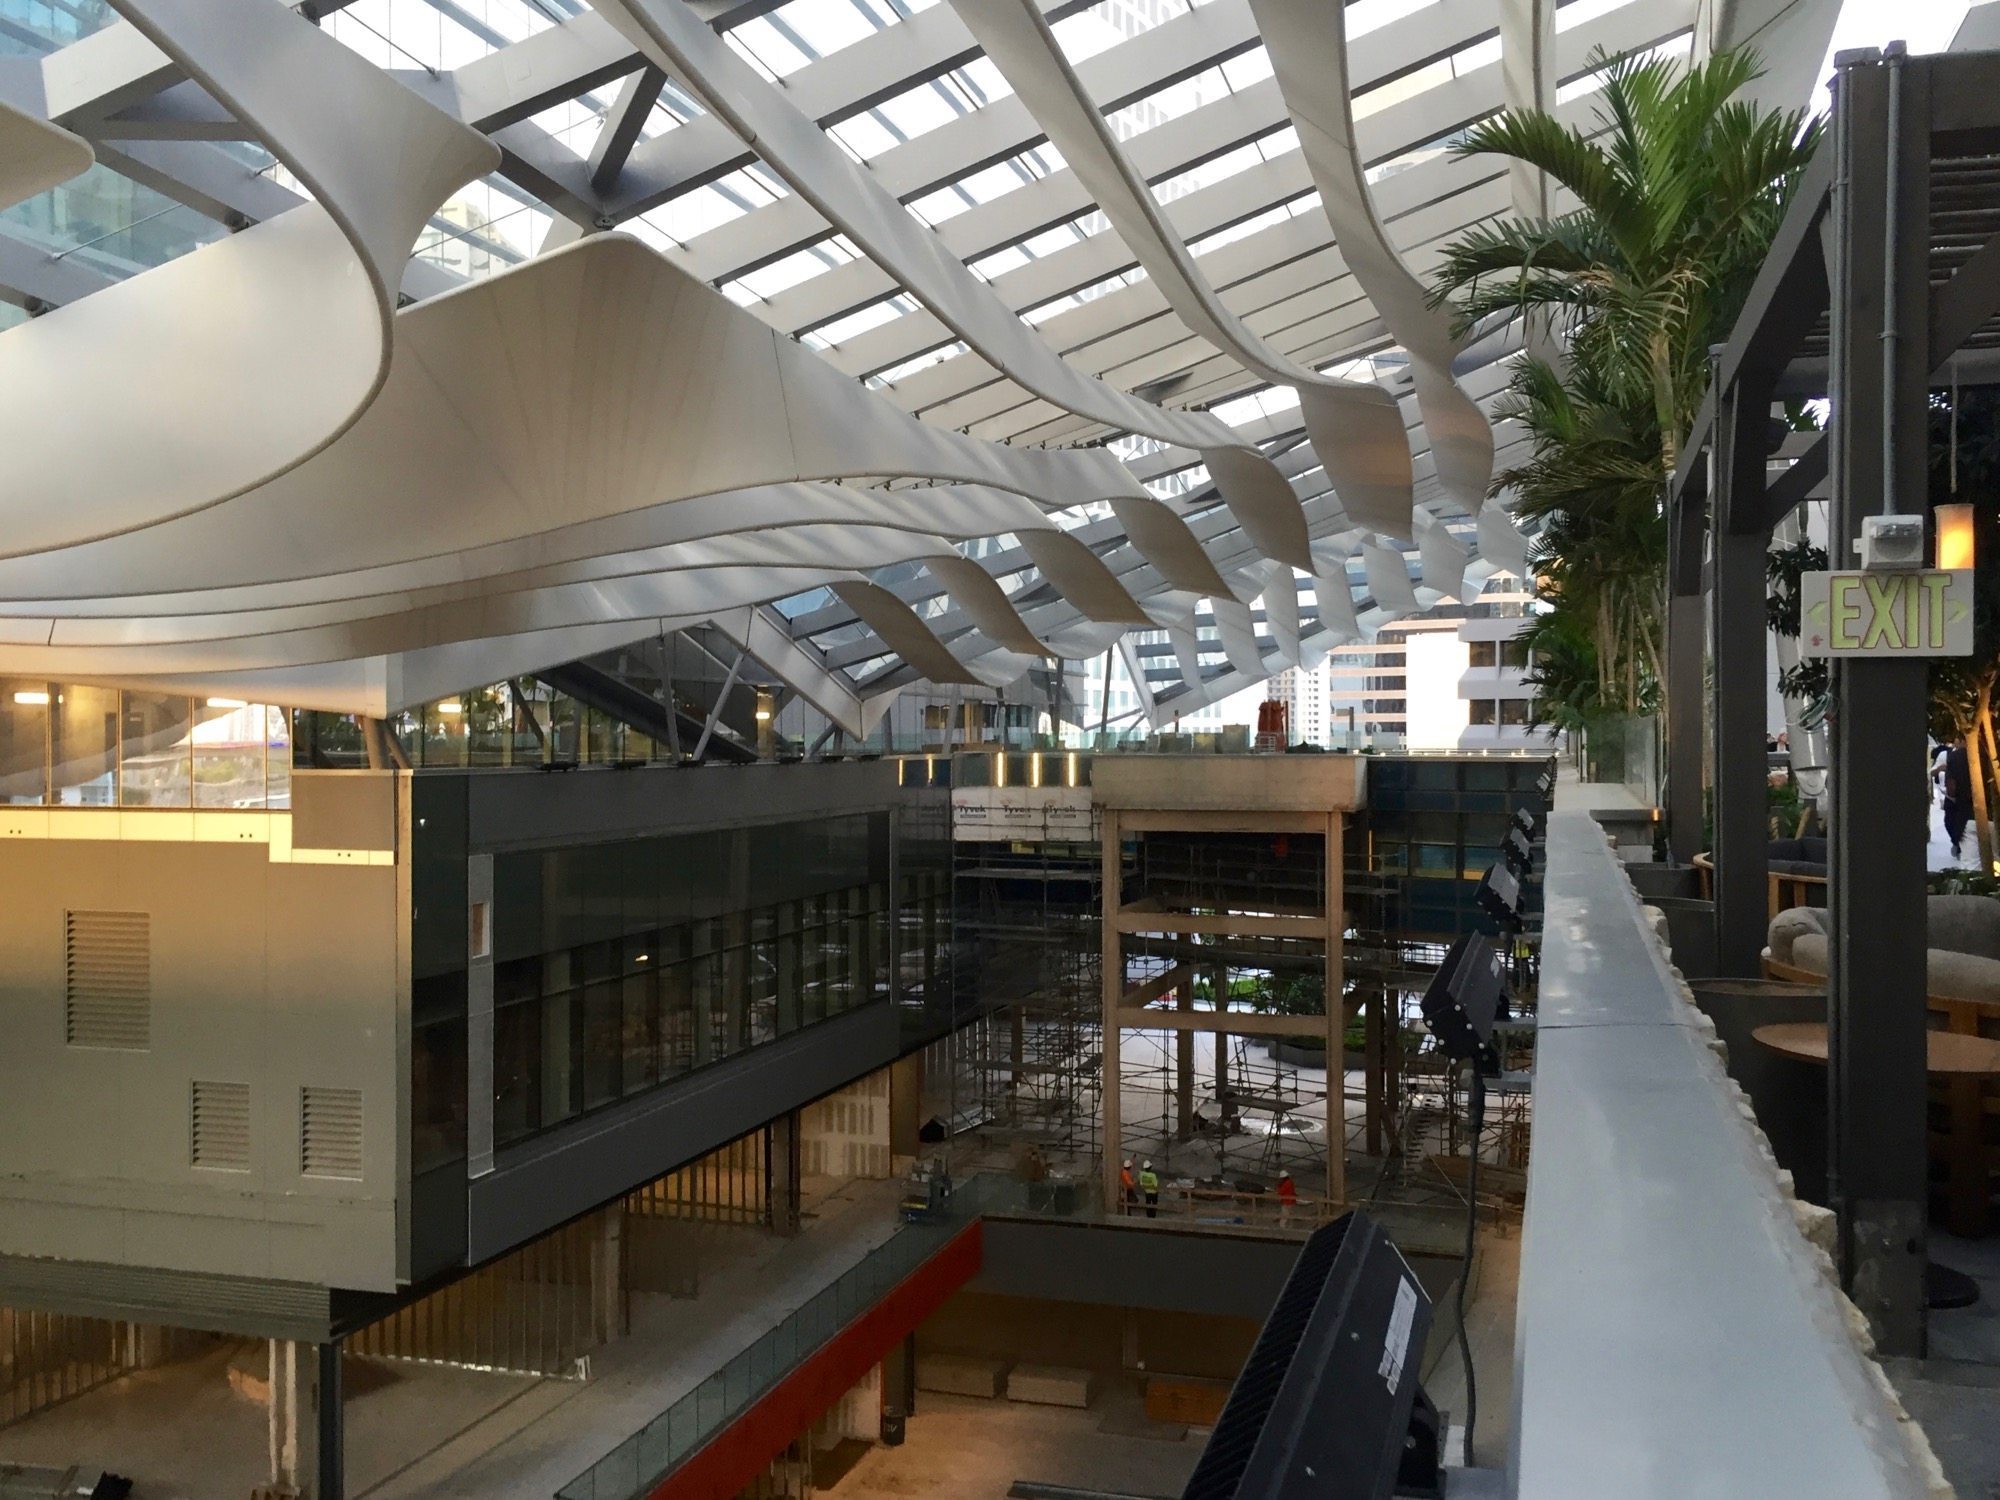 Brickell City Center - The Stylish New Mall in Miami